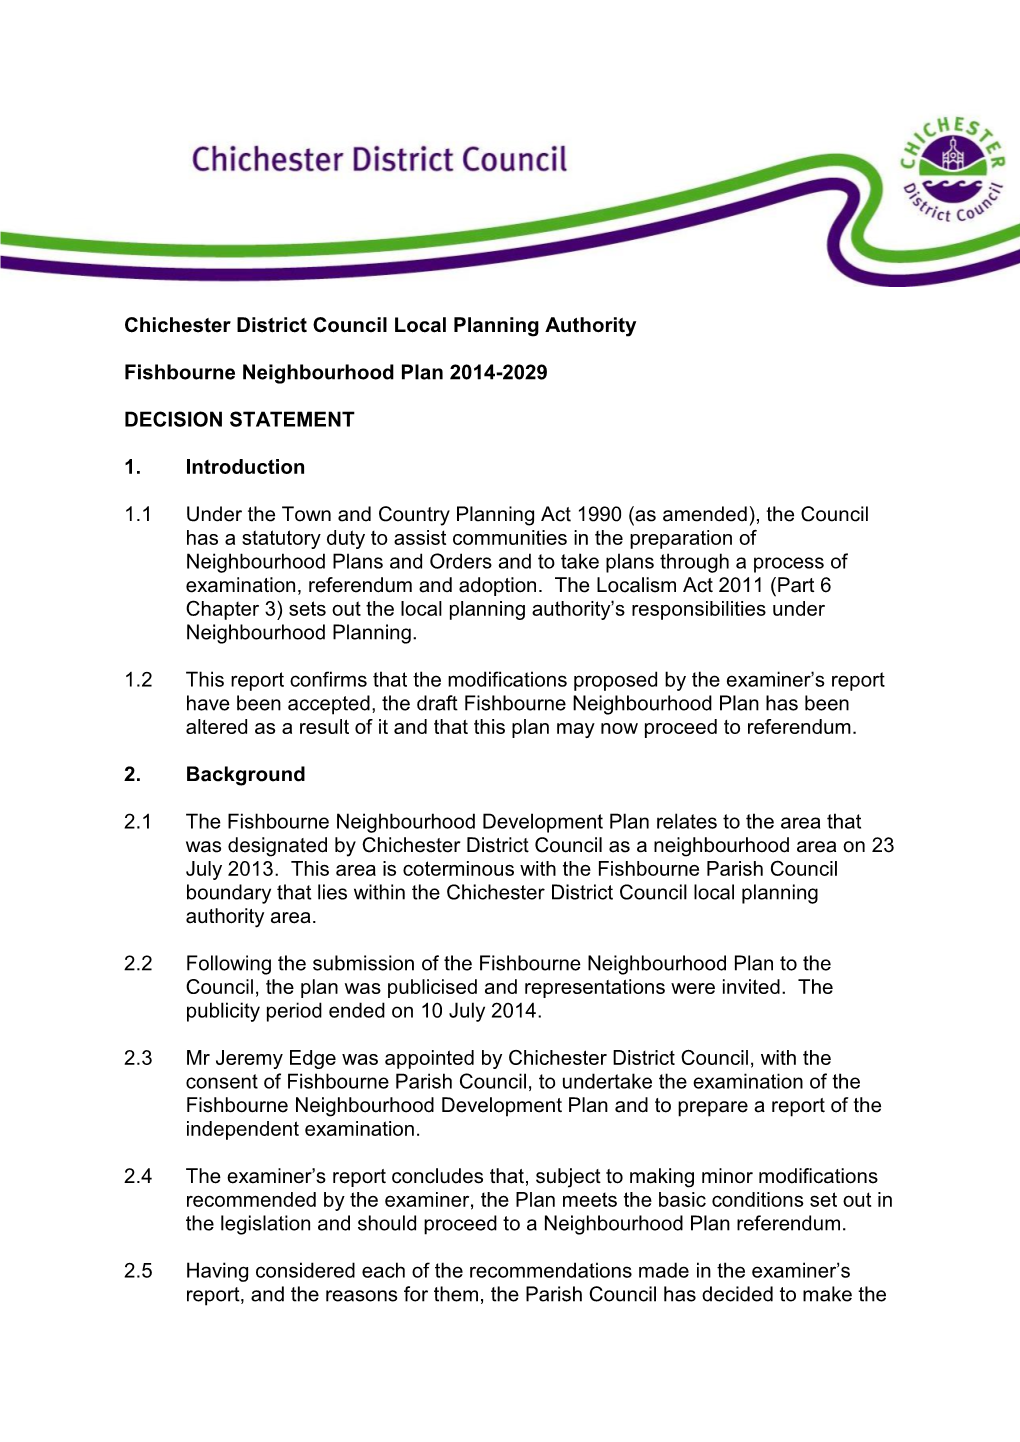 Fishbourne Neighbourhood Plan Decision Statement